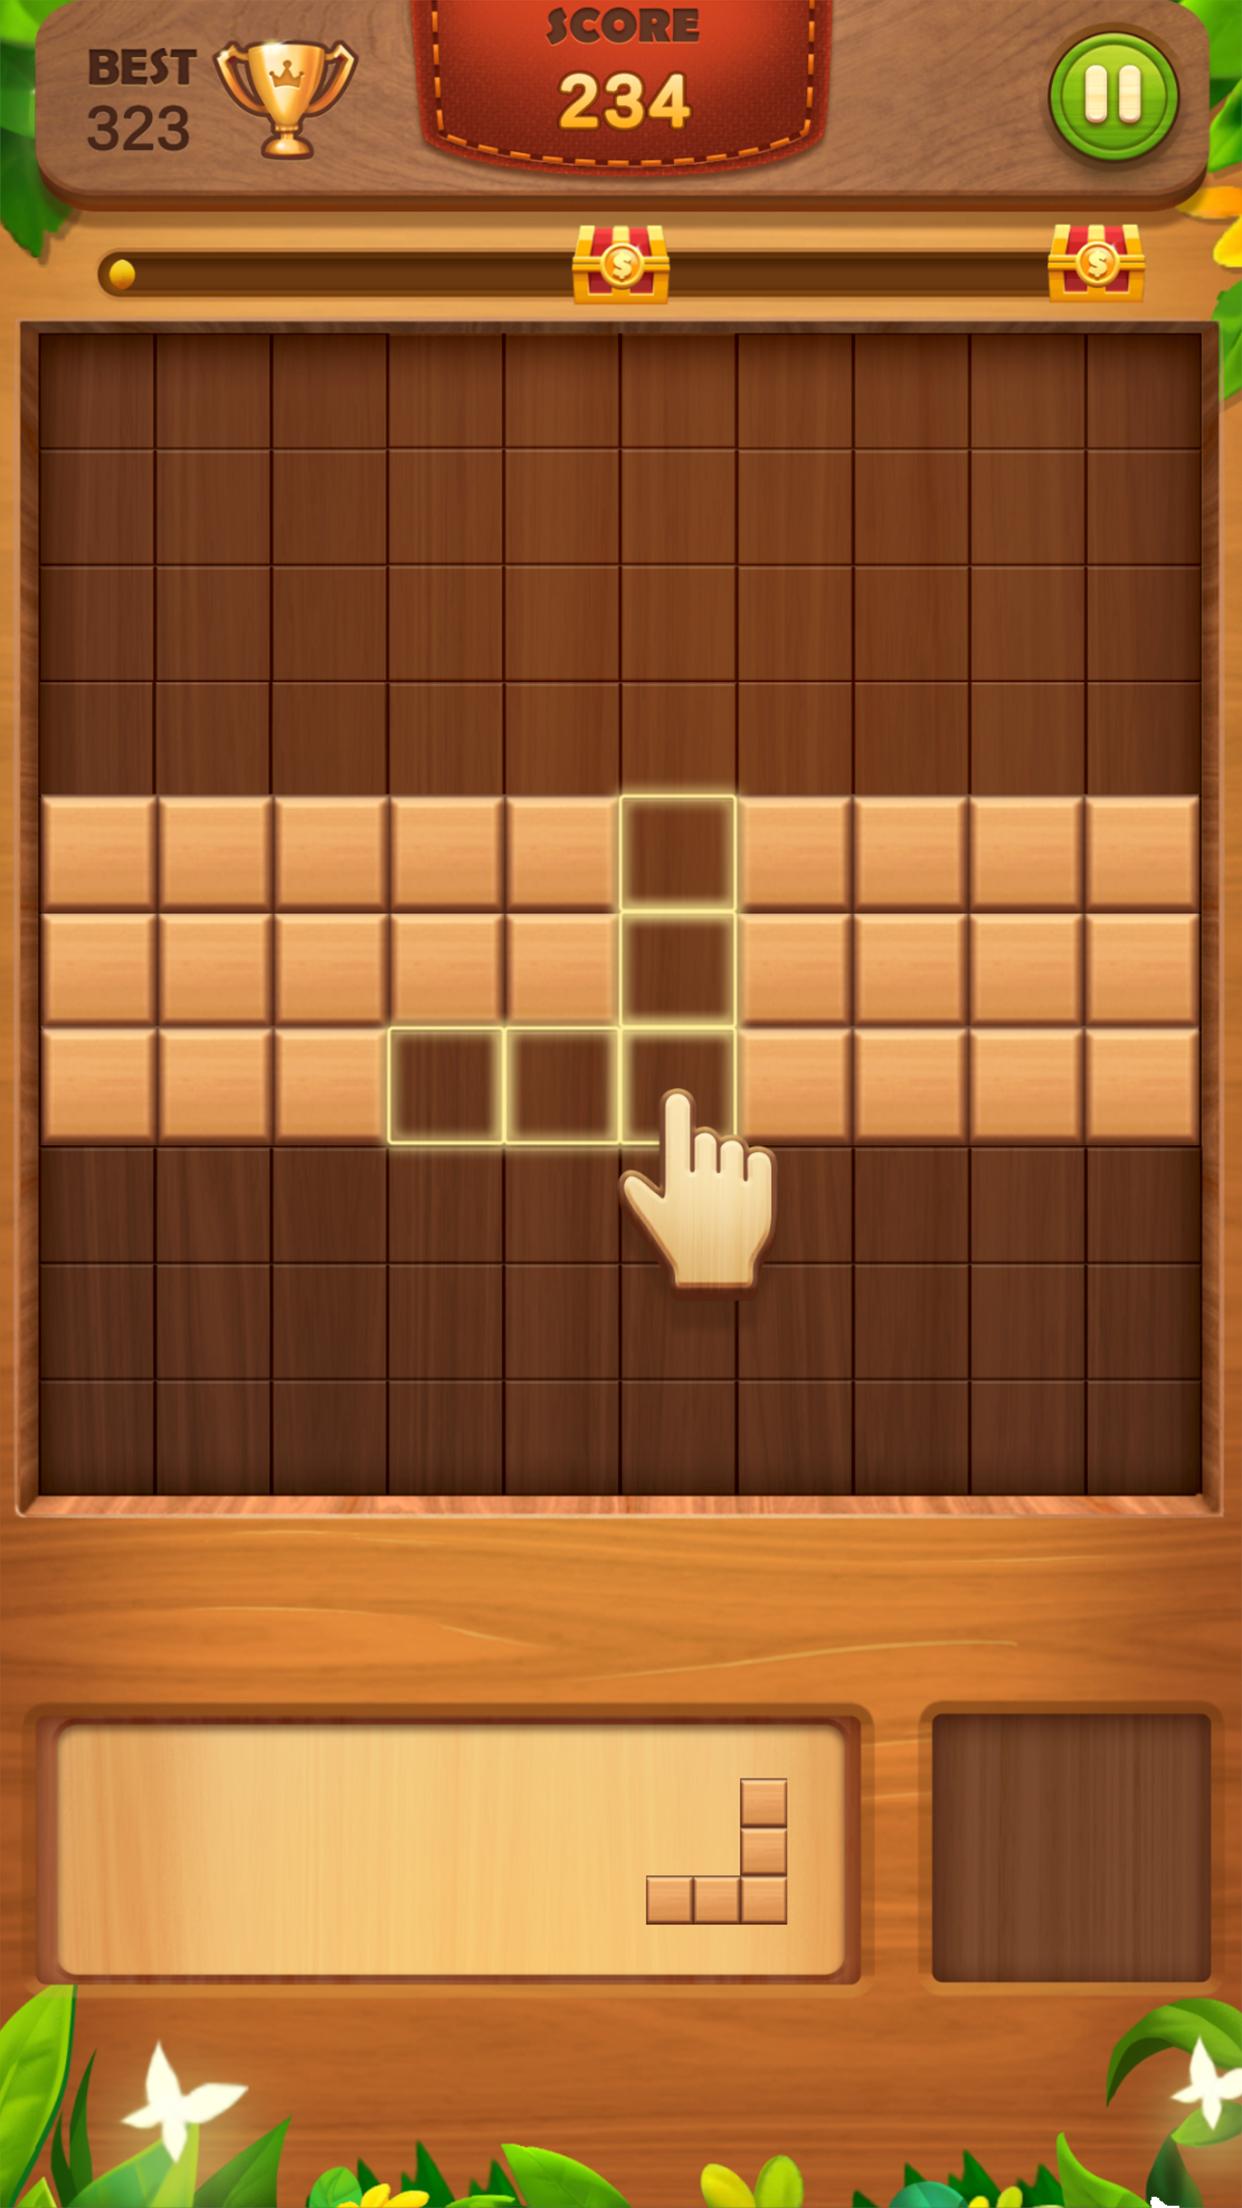 Block Puzzle Brain Training Test Wood Jewel Games 1.3.6 Screenshot 1